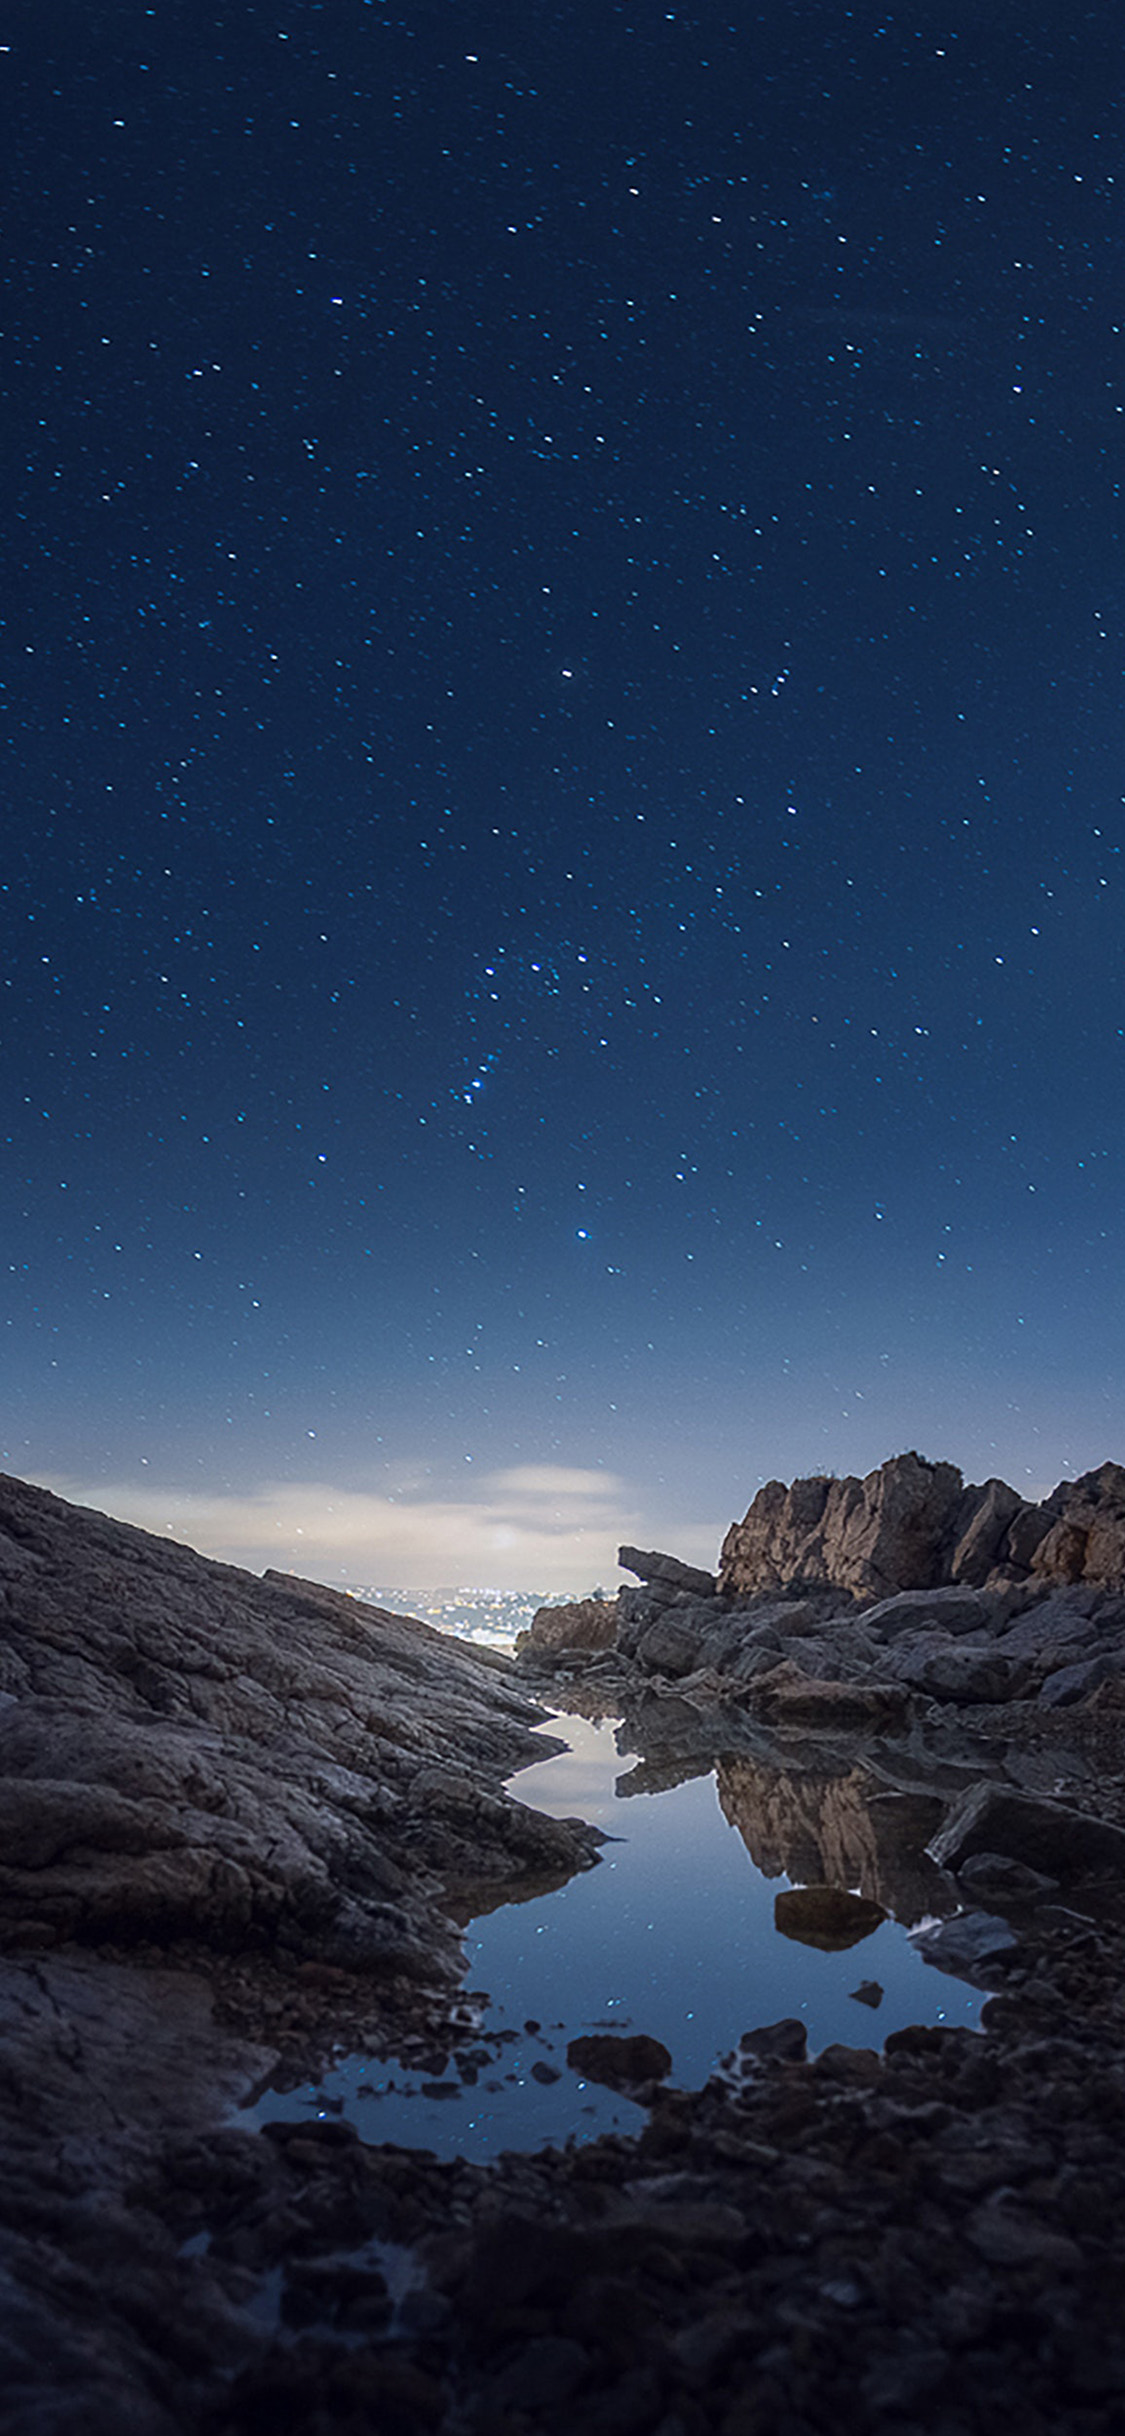 iPhone X wallpaper. night sky star rock mountain galaxy nature